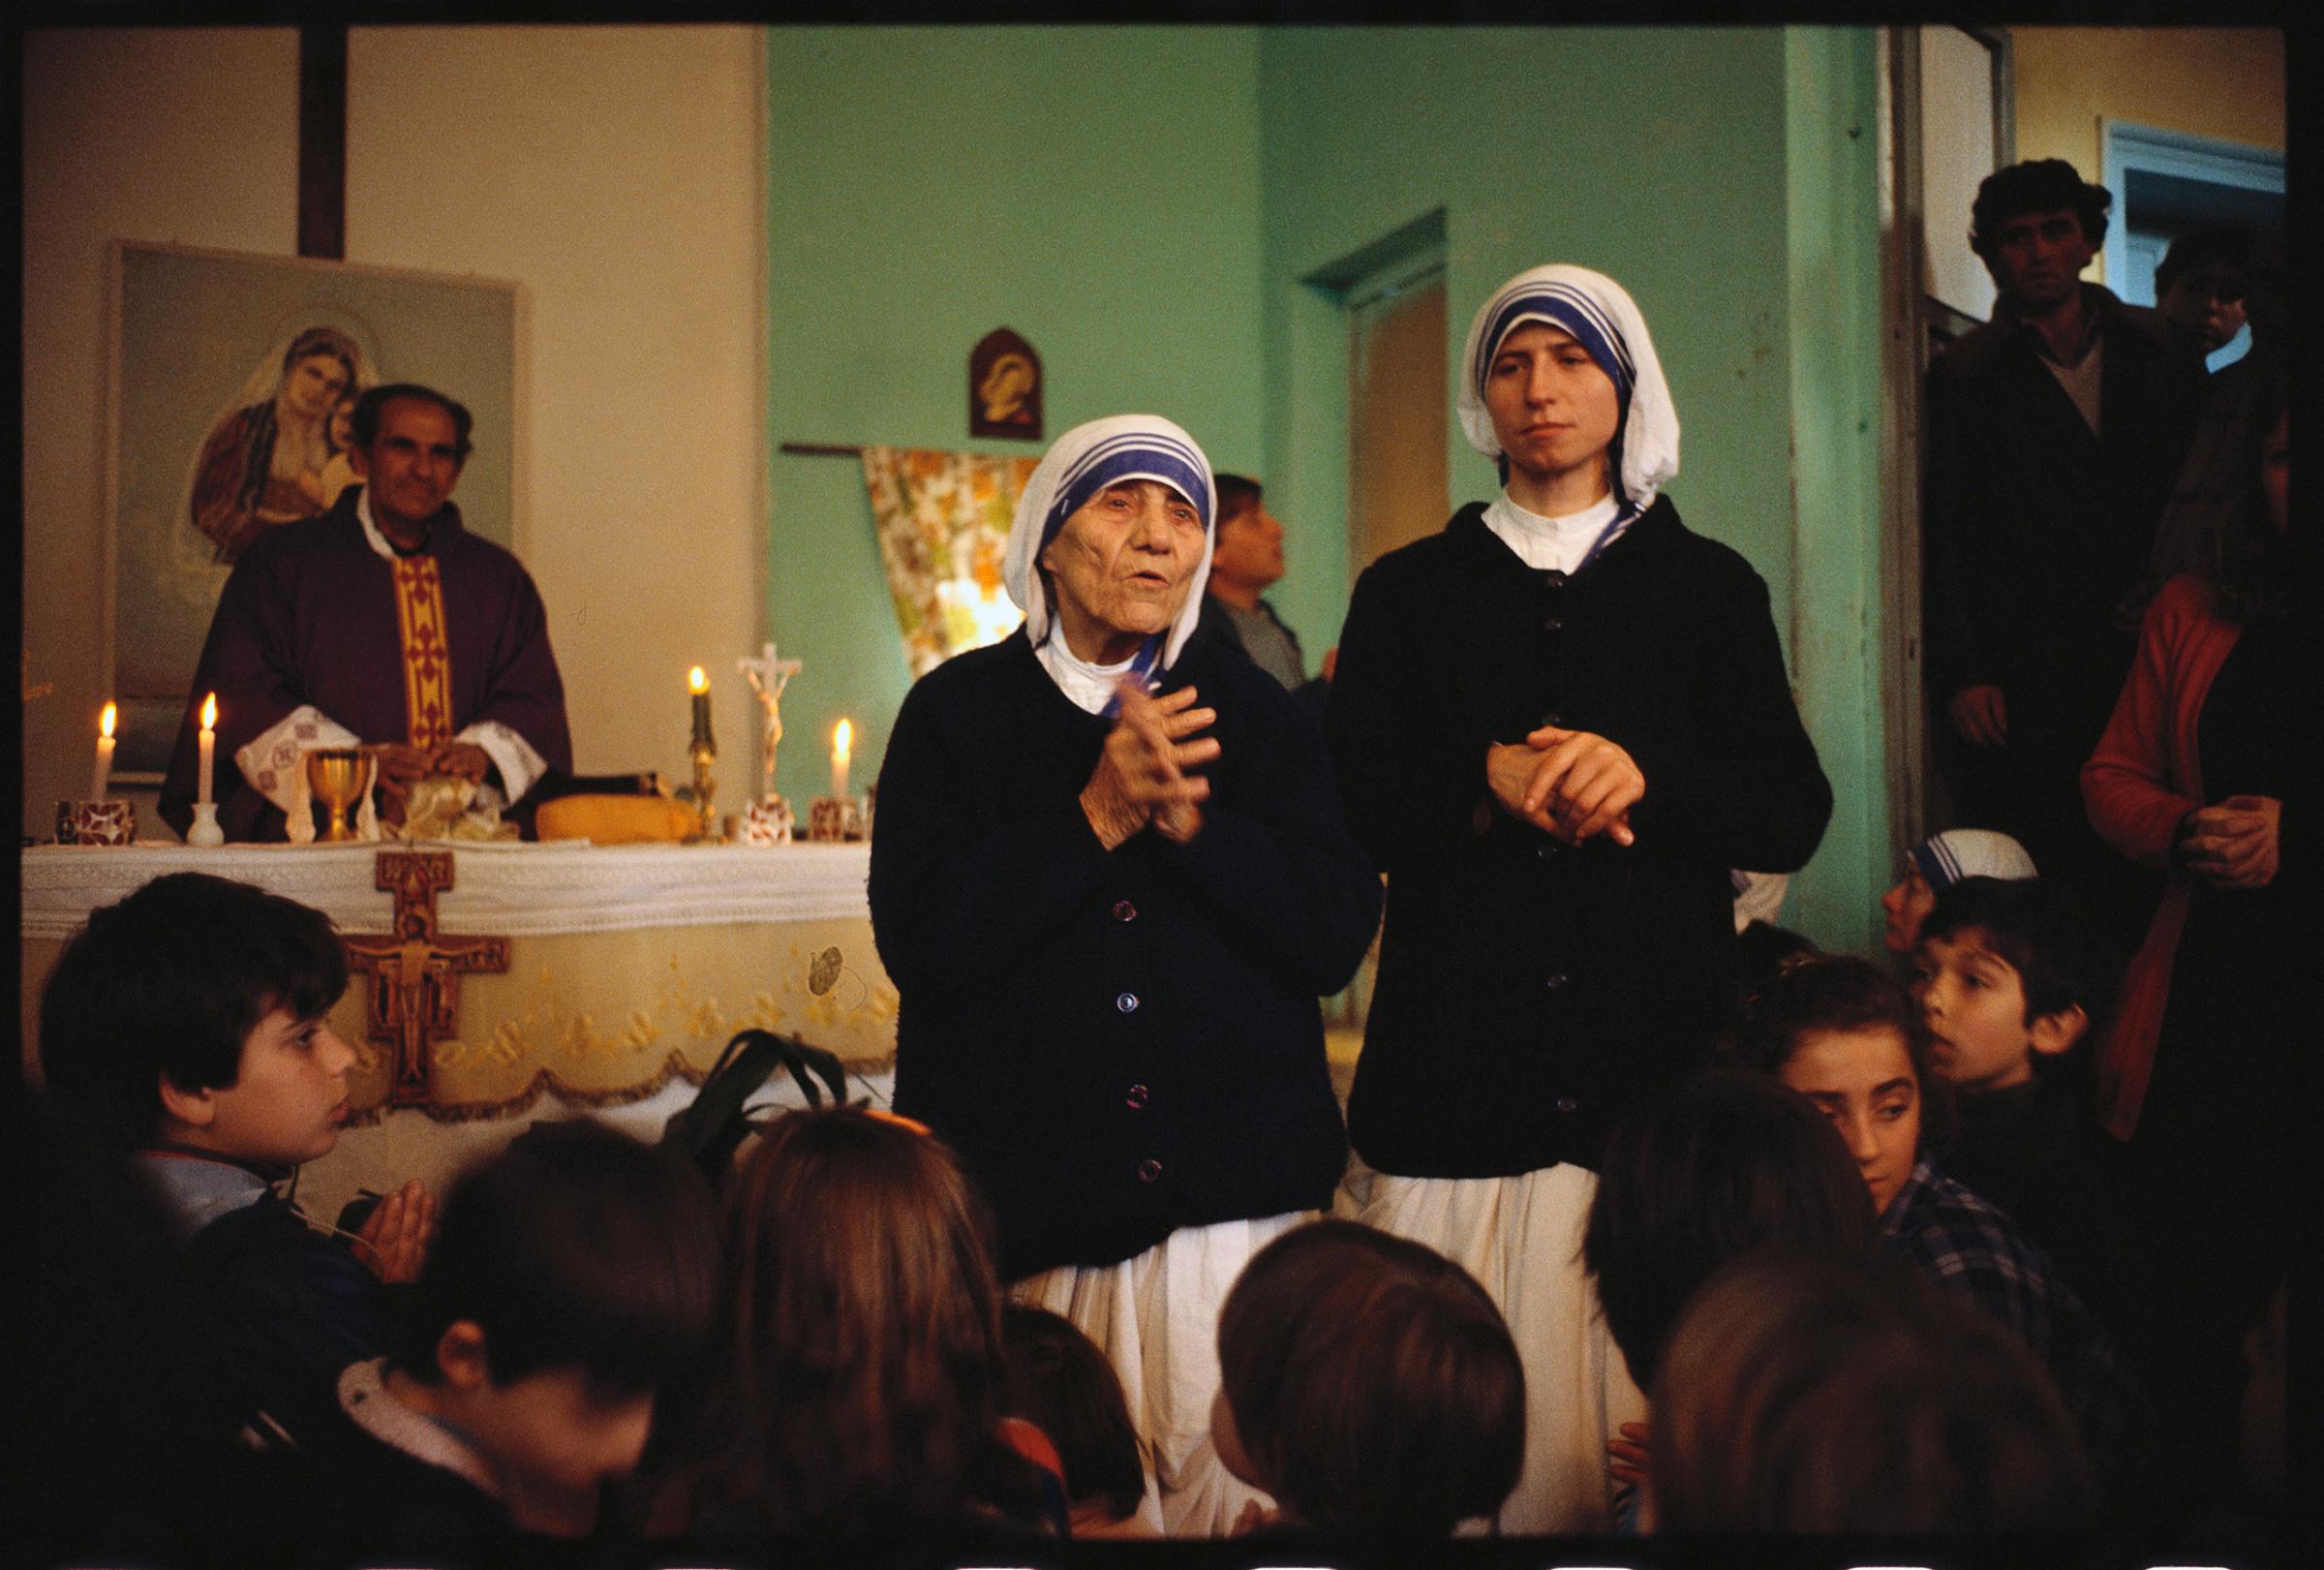 Mother Teresa addresses a group of children during mass at a church.